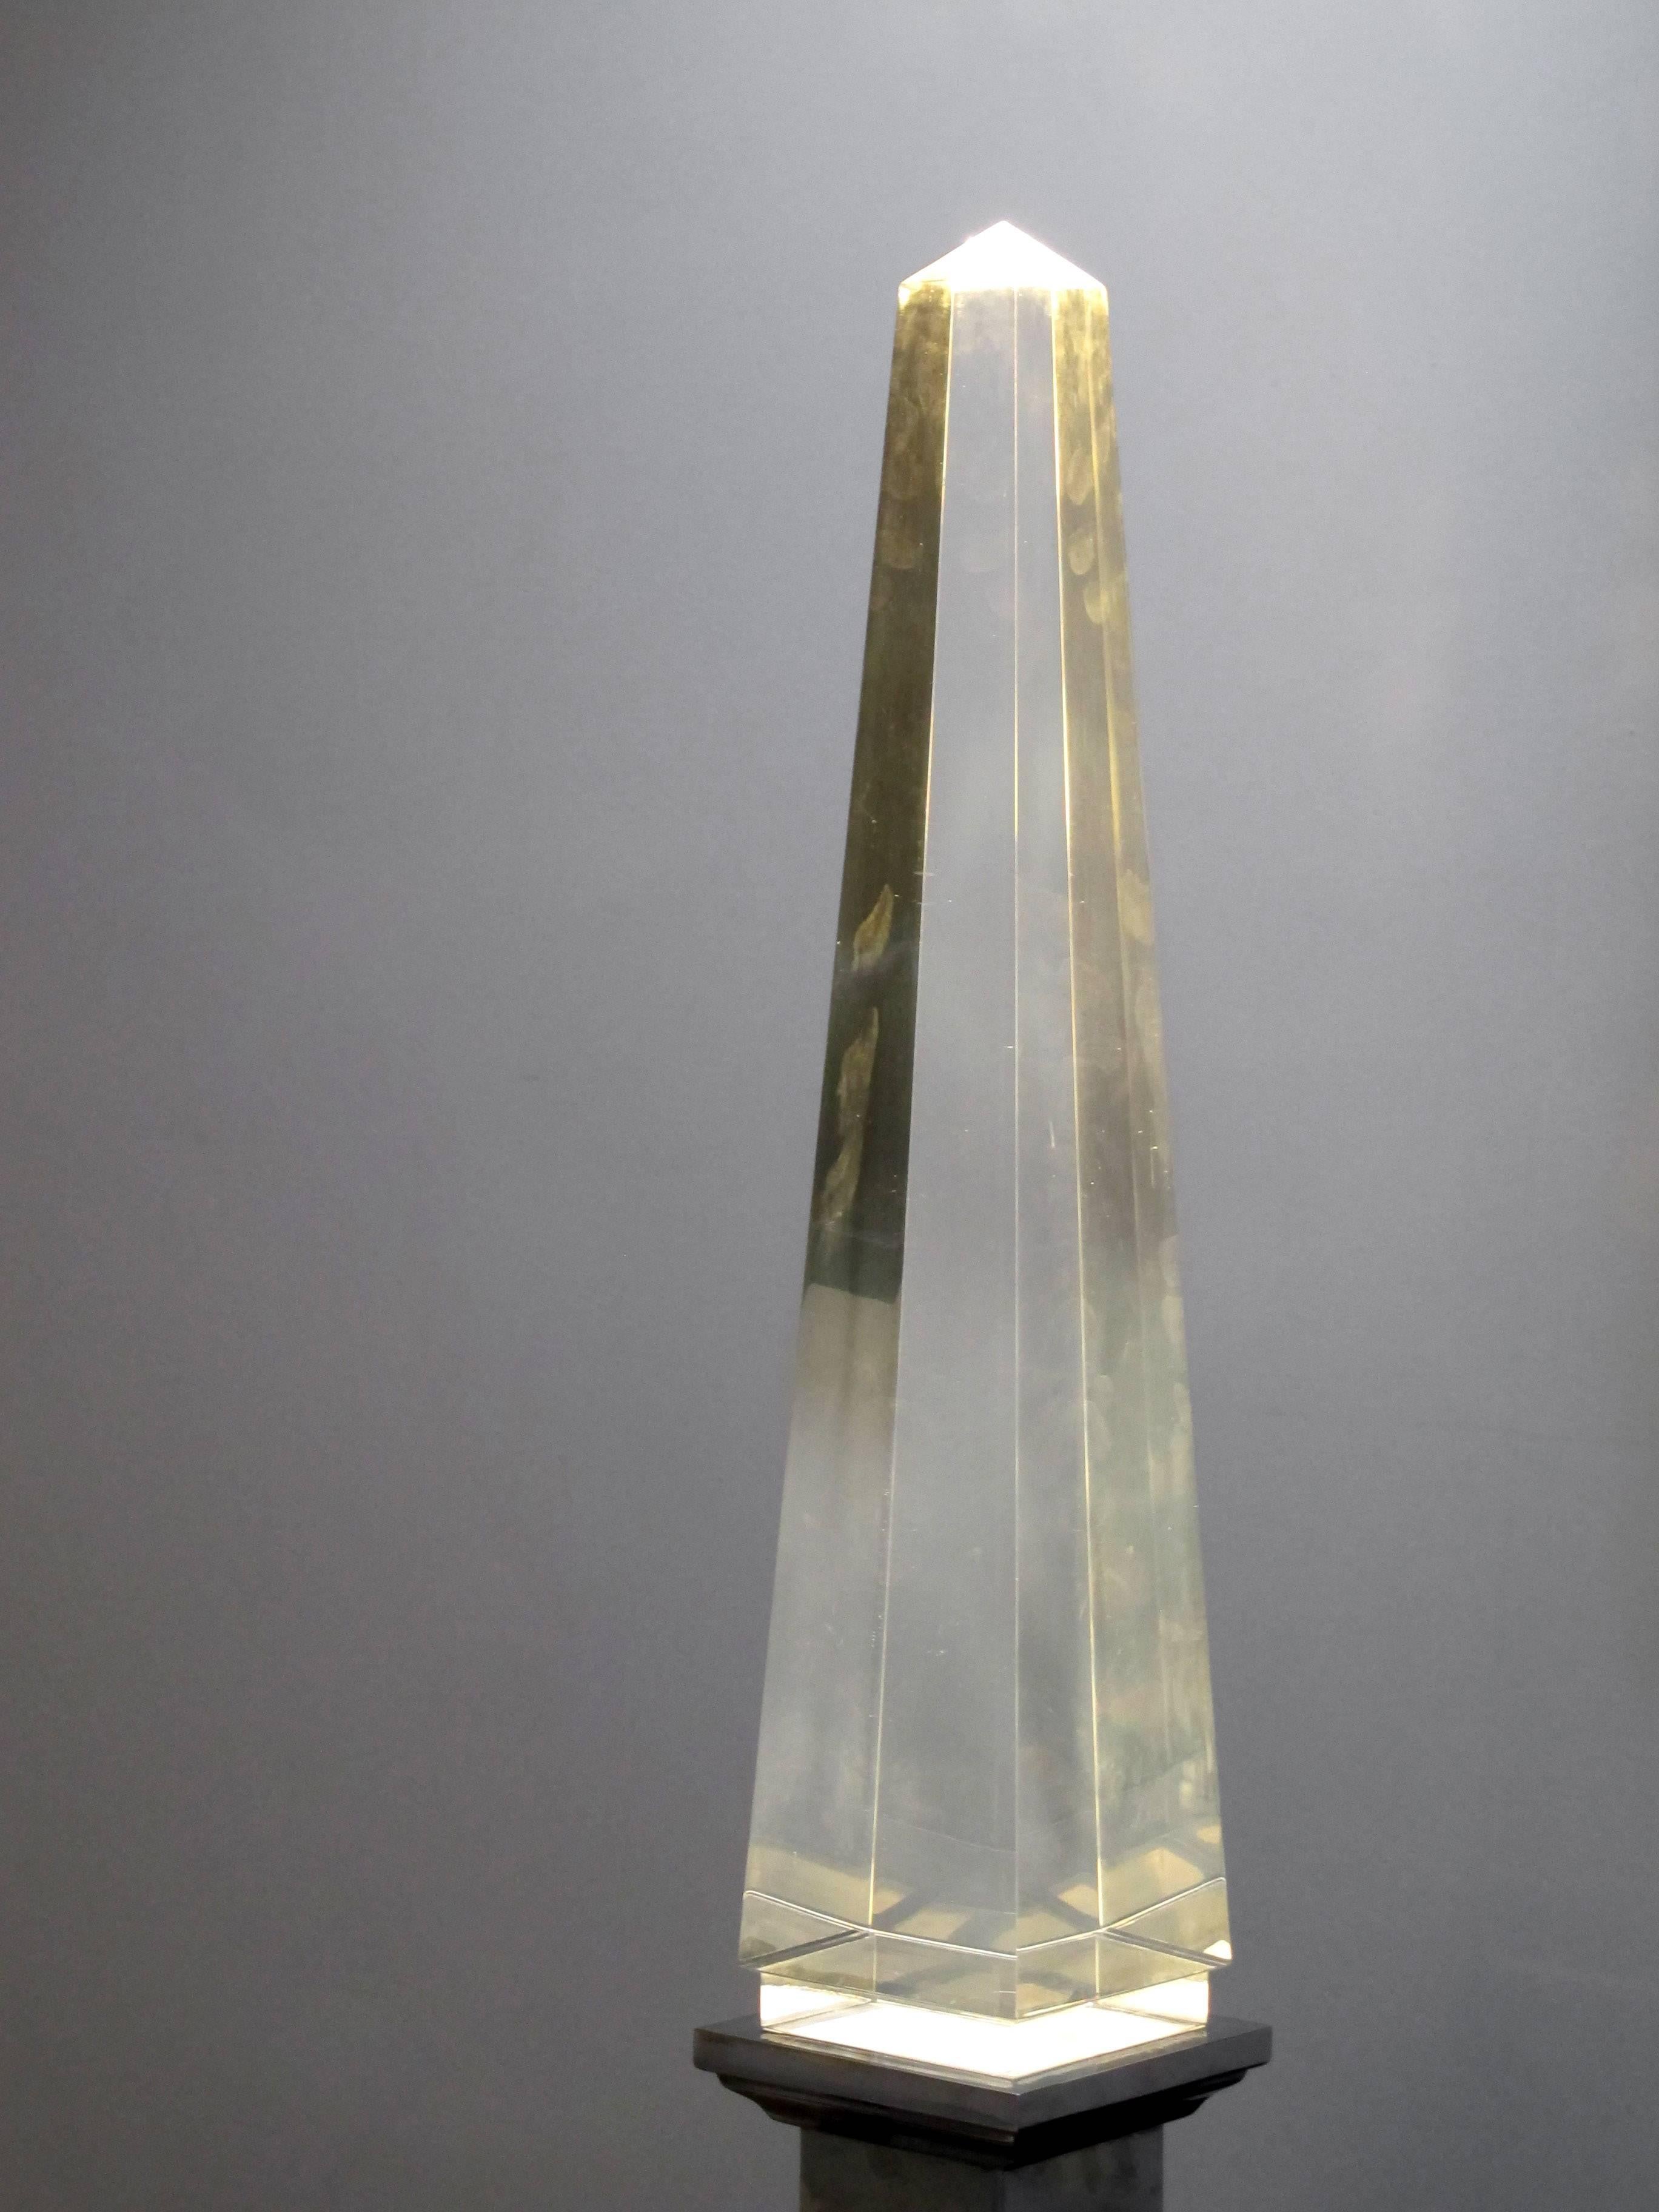 Obelisk table light in Lucite and chrome.
Sandro Petti for Maison Jansen, 
circa 1970, 
France.

Measures: Height 81 cm.

Base 21.5 x 21.5 cm.